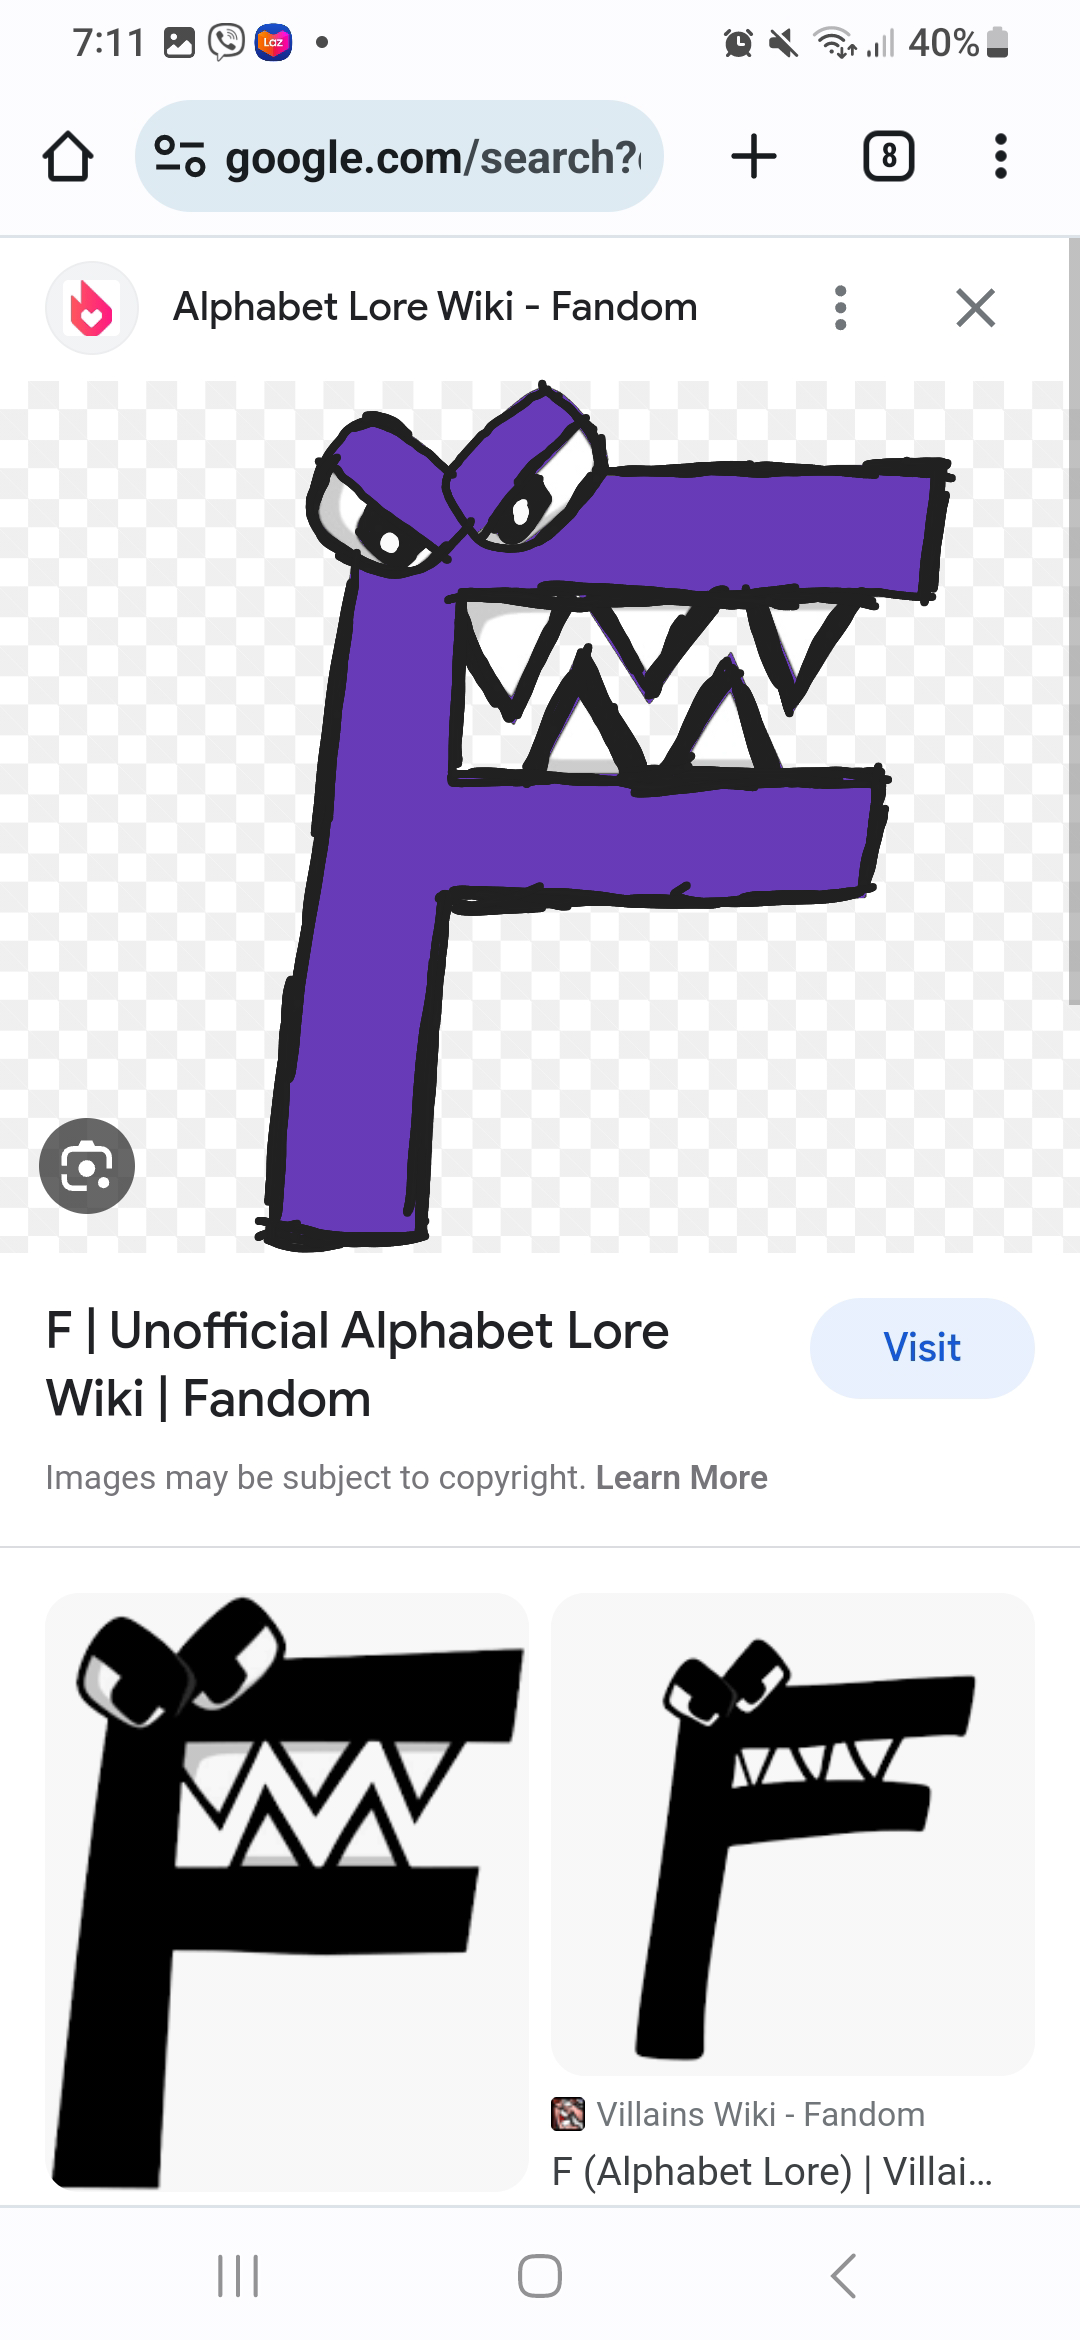 B, Unofficial Alphabet Lore Wiki